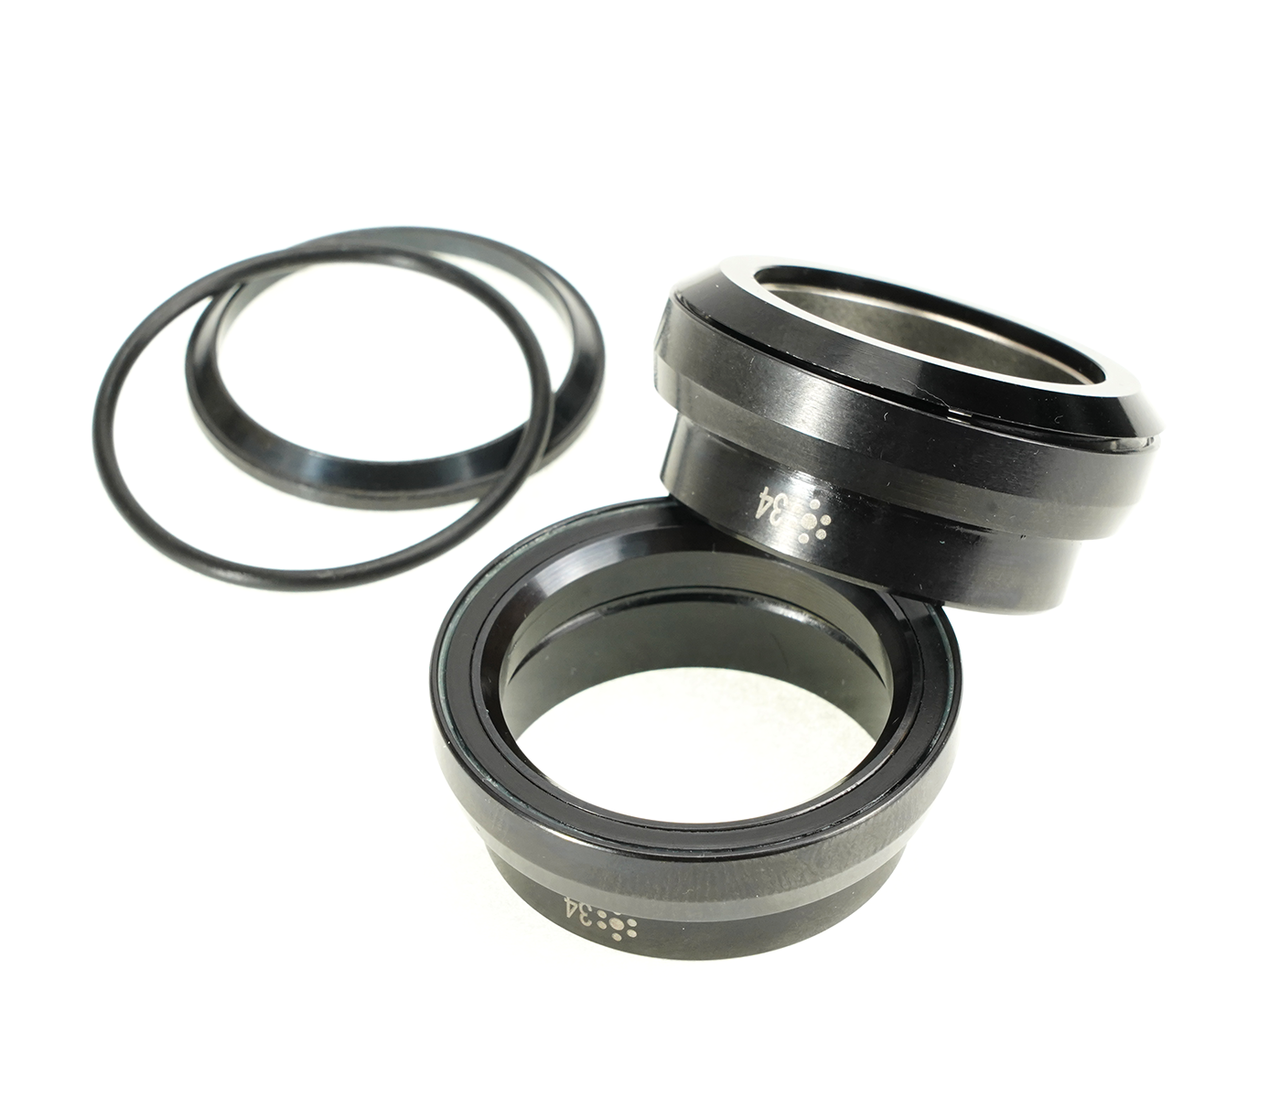 Enduro HDK-0007 - 1-1/8 Black Oxide, Angular Contact, External Bearing Kit for 34mm (1 1/8) ID head tube framesets.